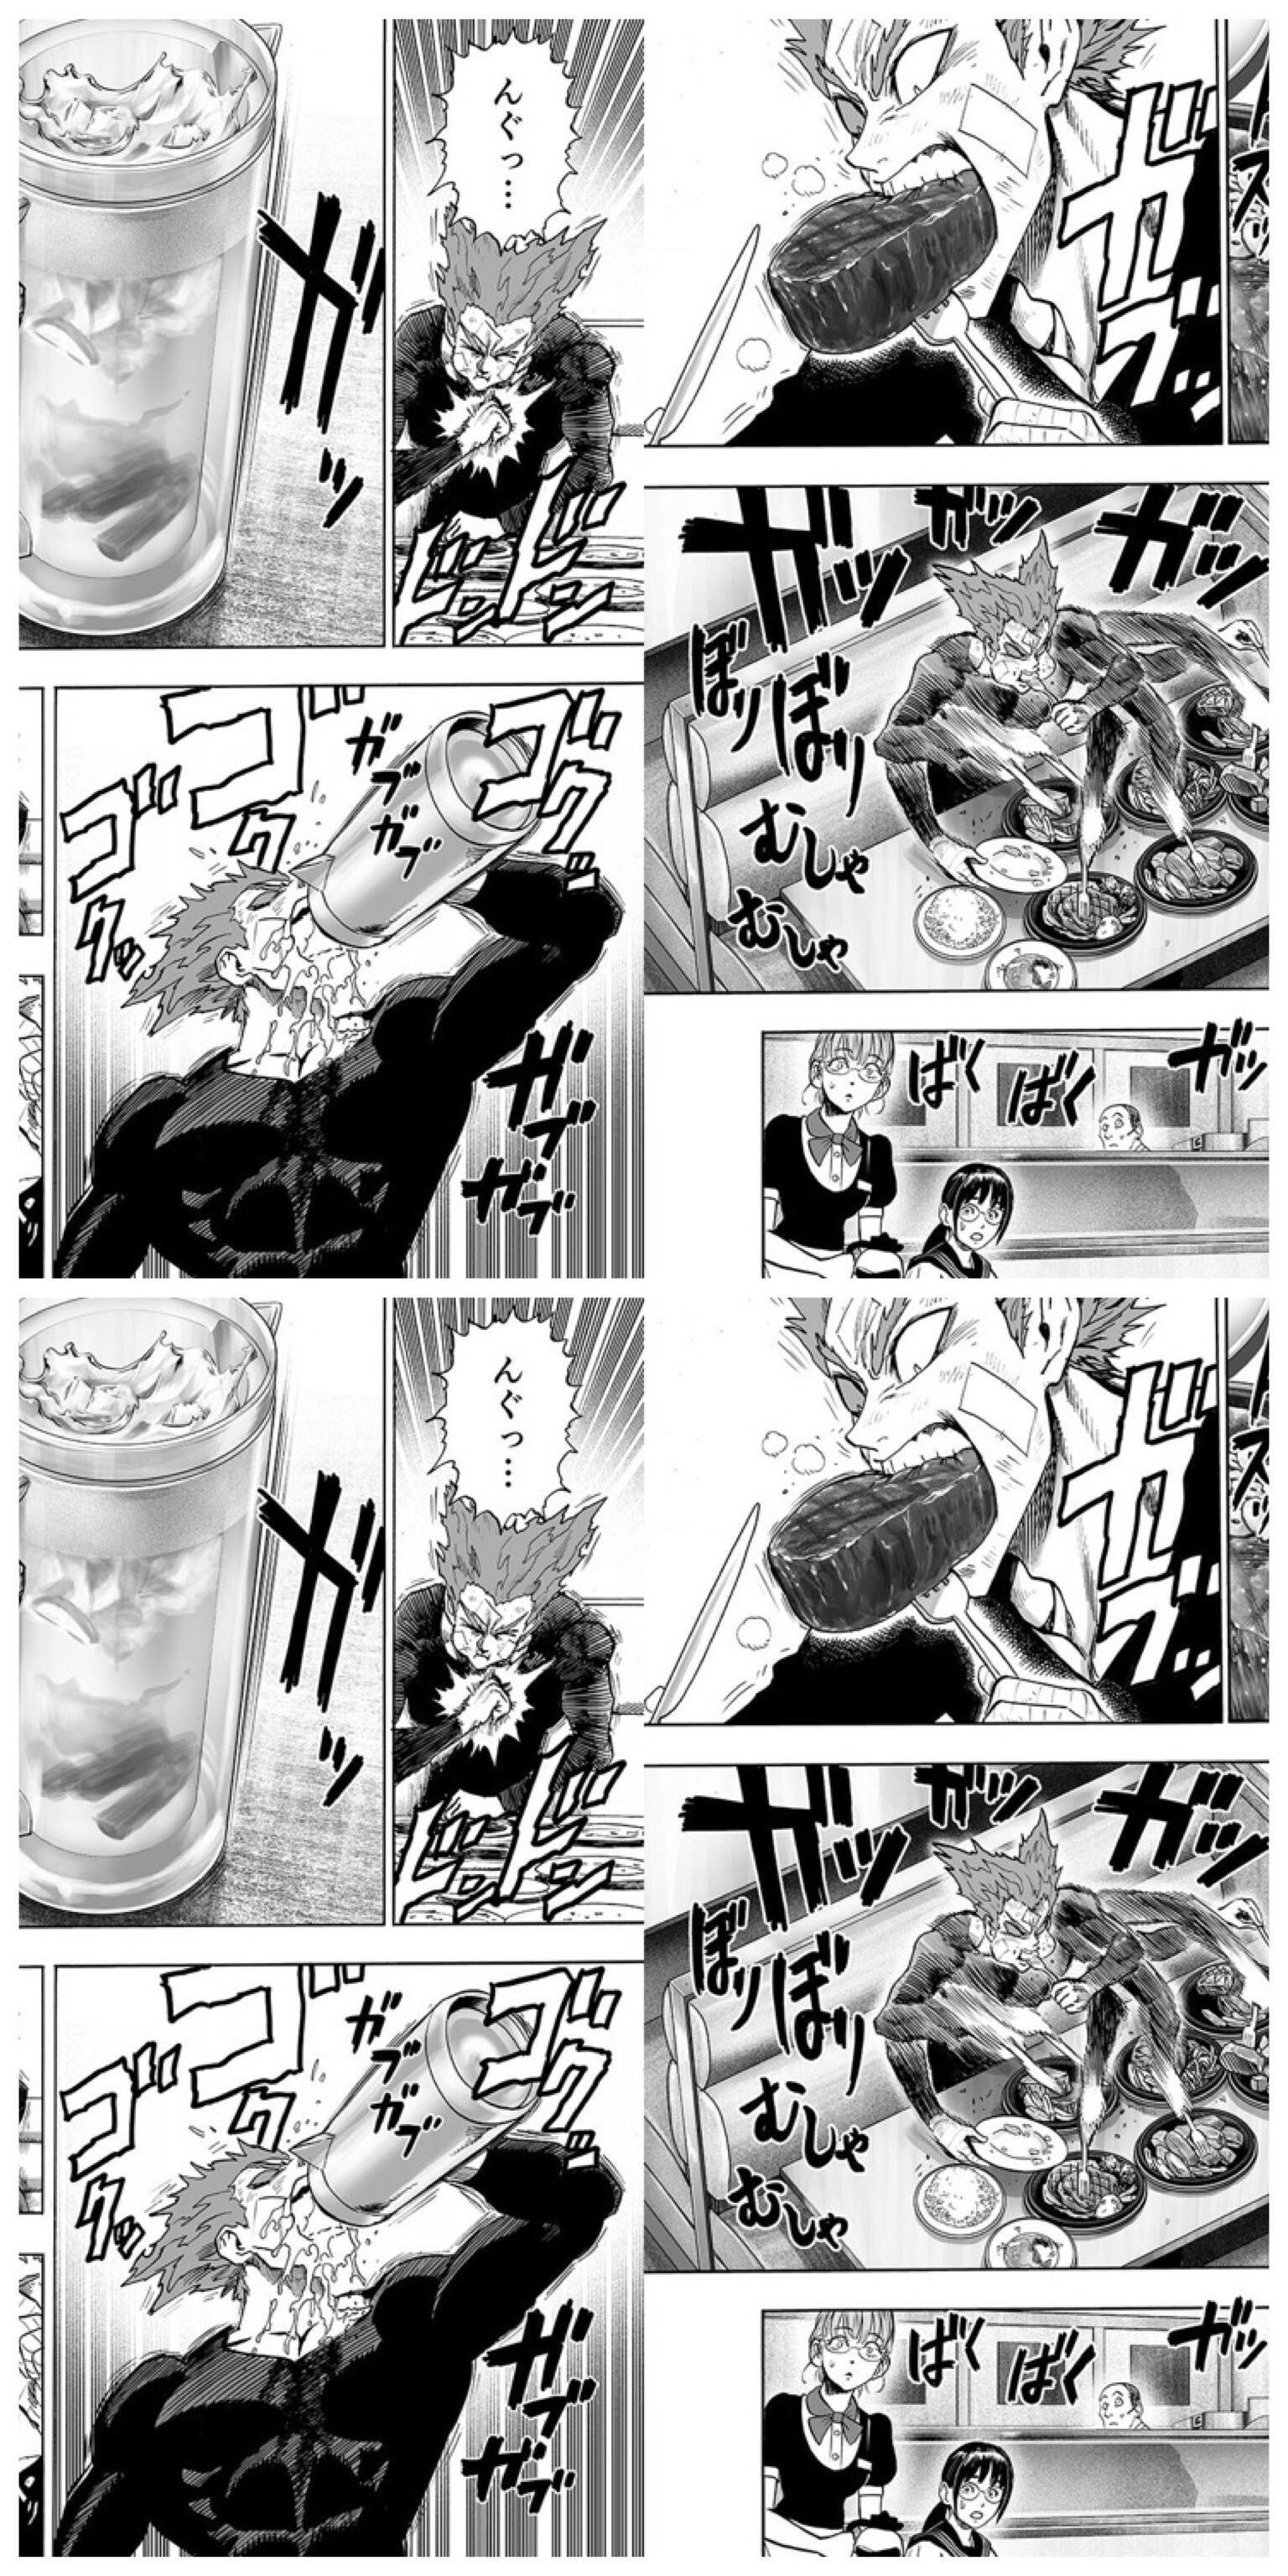 The んぐっ 2 Cartoon Black And White Comics Comic Book - One Punch Man Garou Eat - HD Wallpaper 